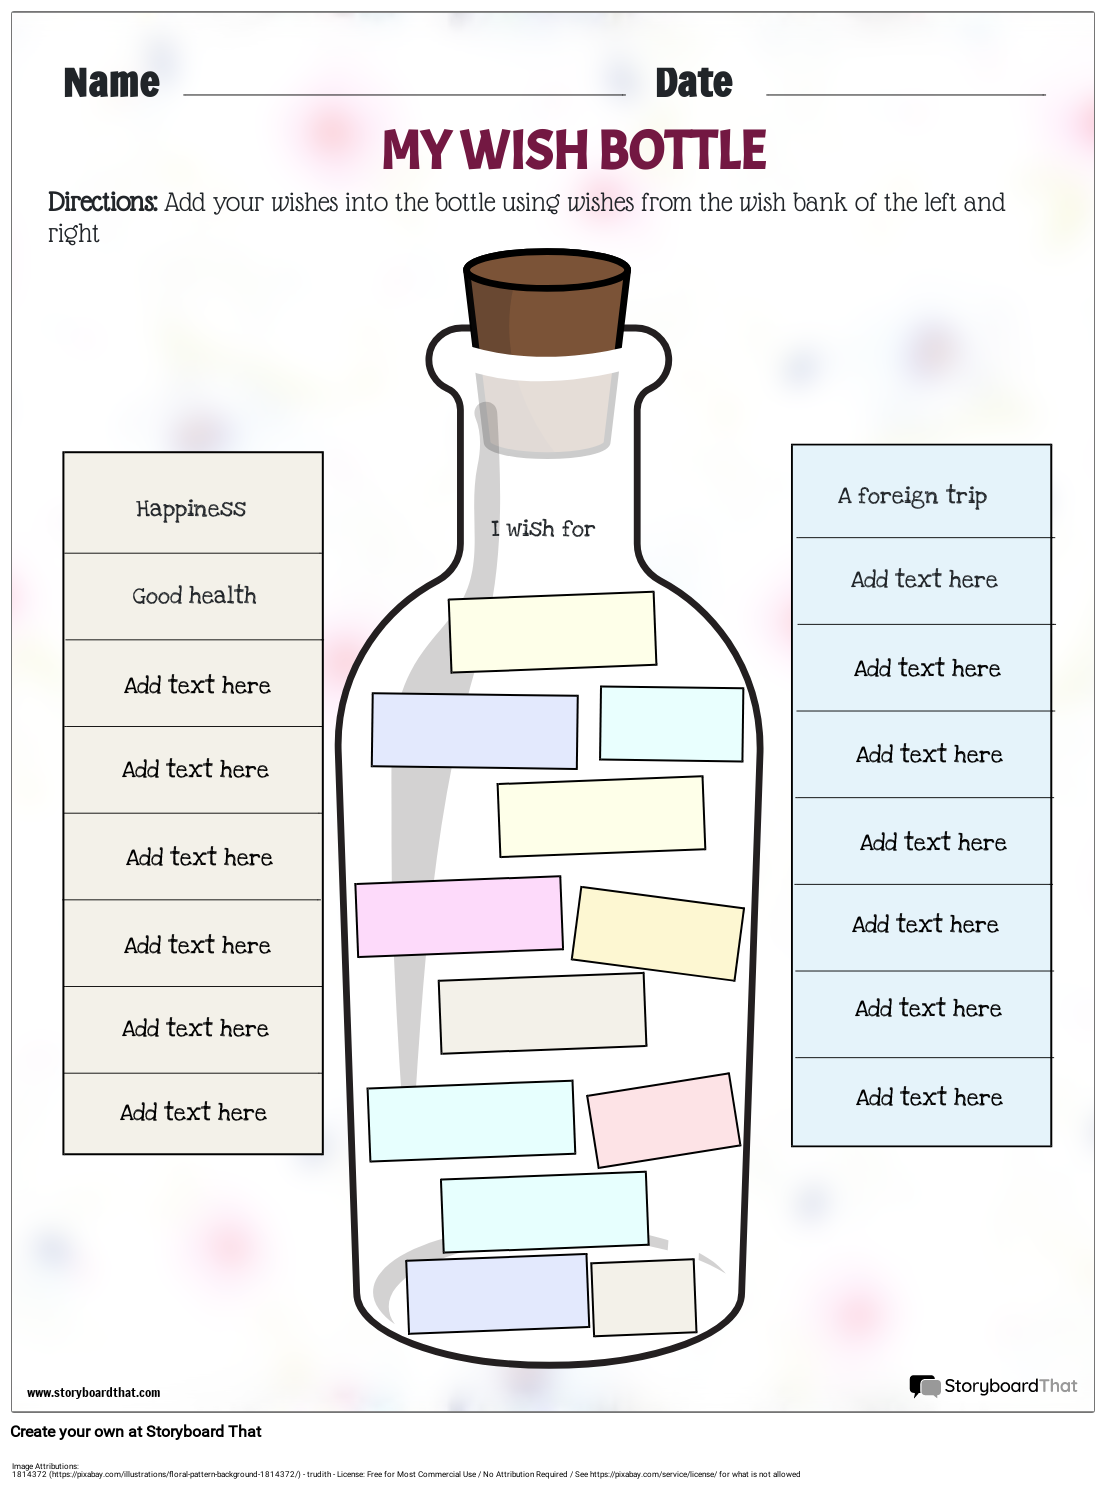 My wish bottle worksheet